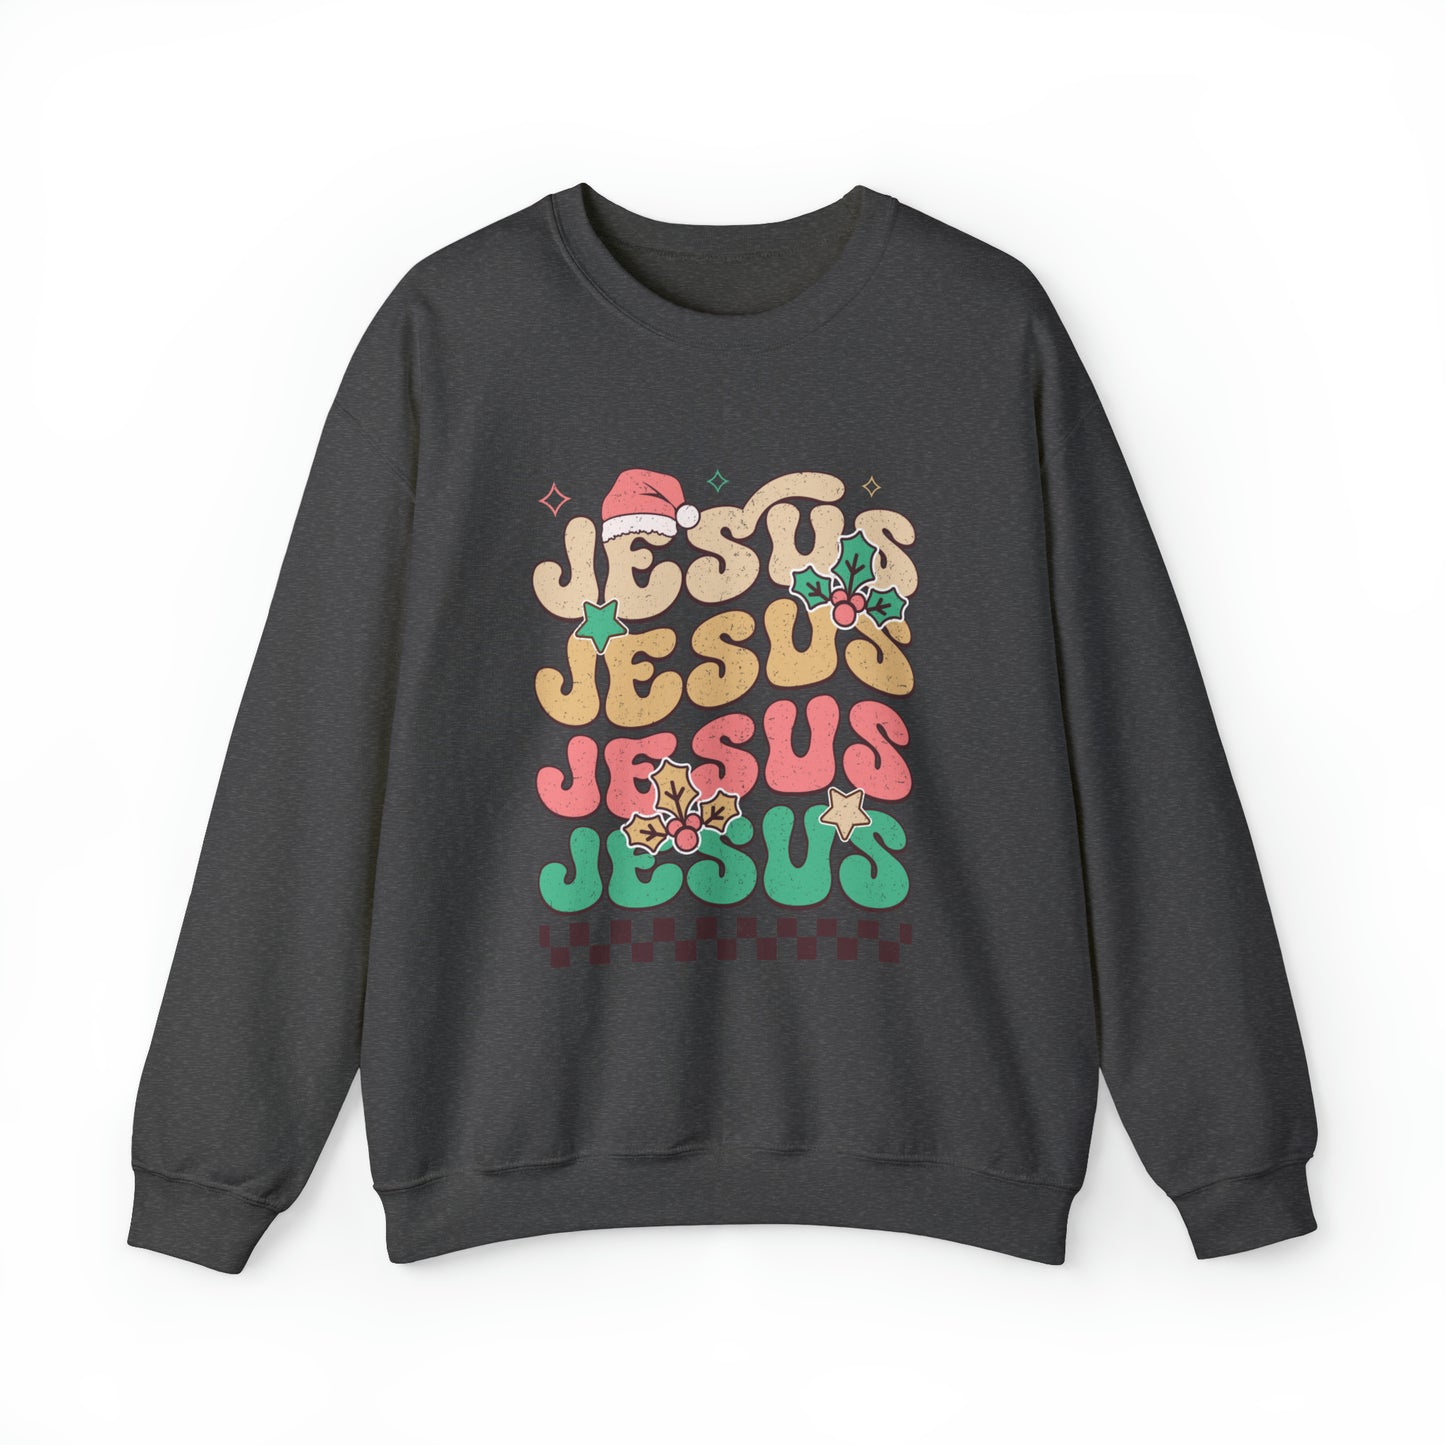 Jesus Women's Christmas Sweatshirt